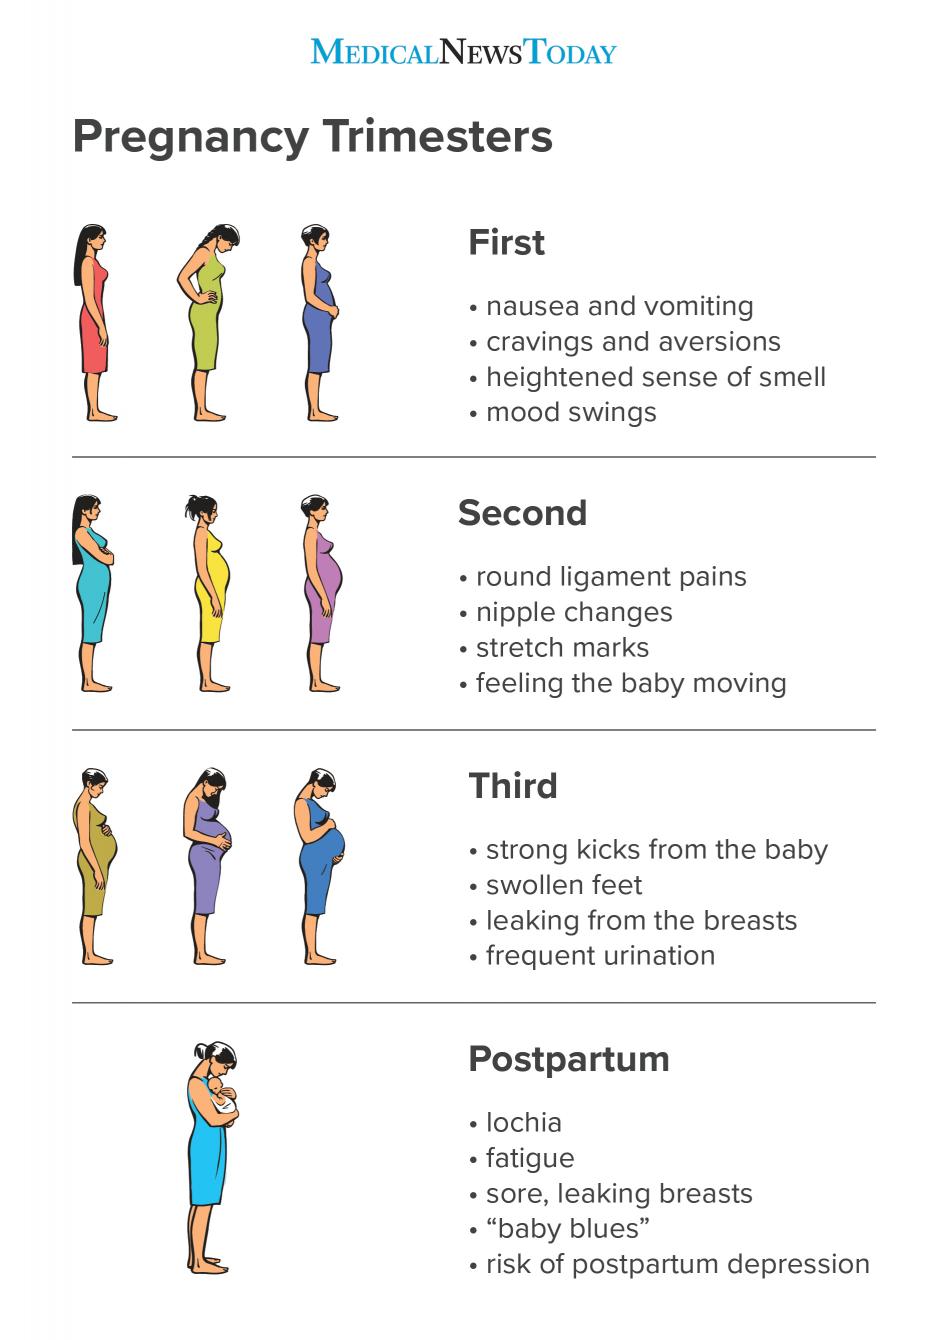 Pregnancy trimester infographic <br>Image credit: Stephen Kelly, 2018</br>